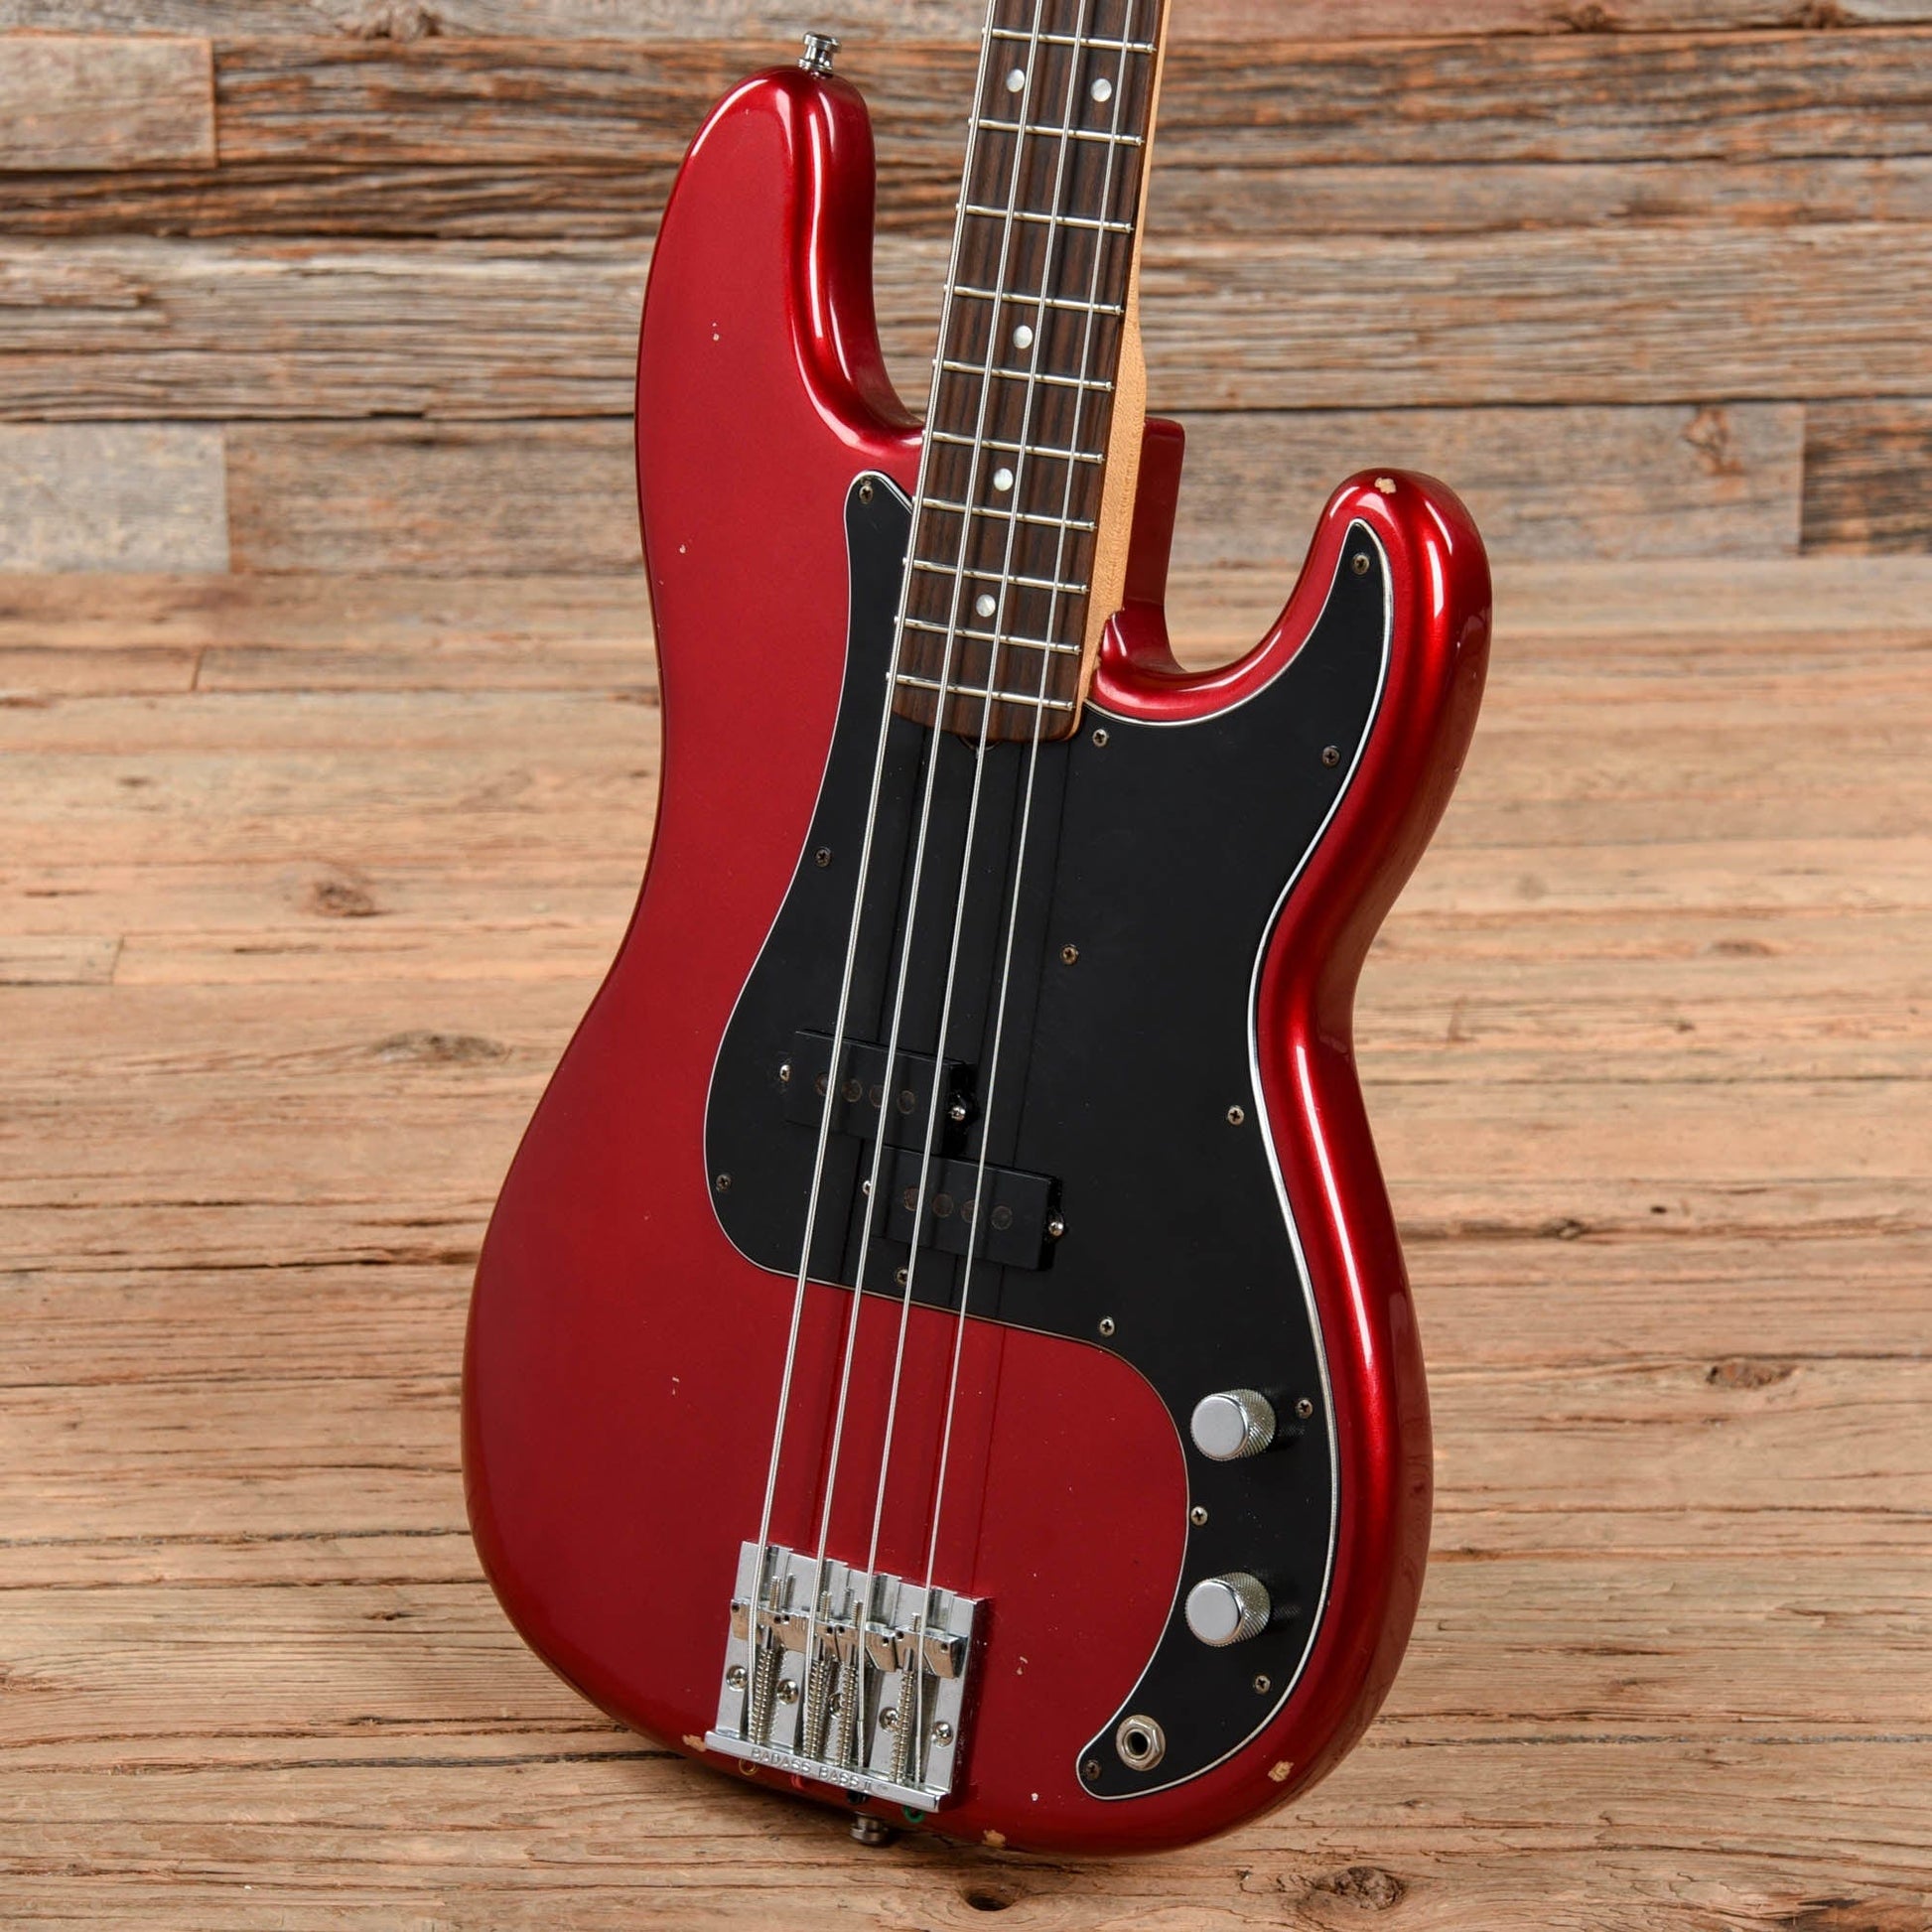 Fender Nate Mendel Artist Series Signature Precision Bass Candy Apple Red Bass Guitars / 4-String